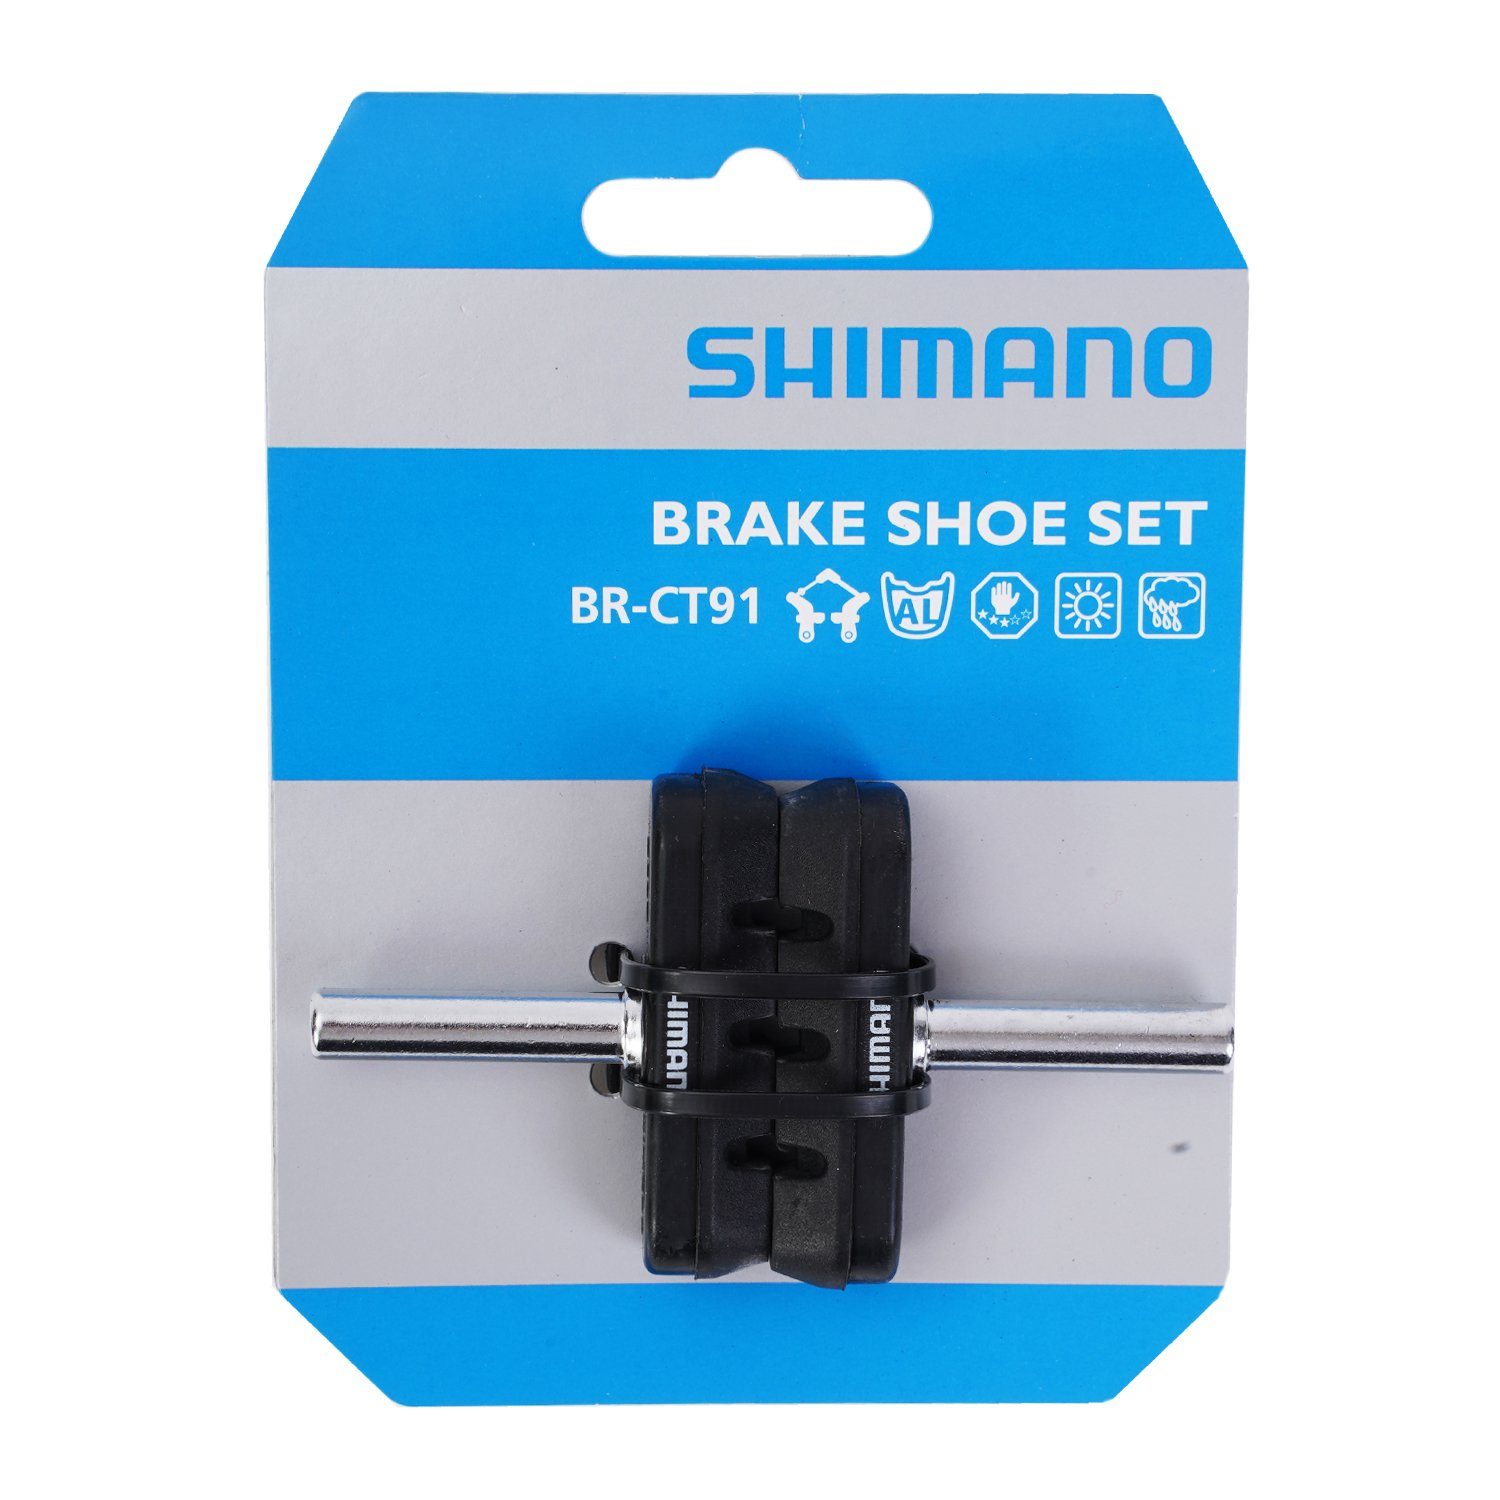 Cantilever-Bremse Bremsklotz-Satz Shimano BR-CT91 2x Bremse Mittelzug Cantilever Bremsbeläge Bremsbelag,